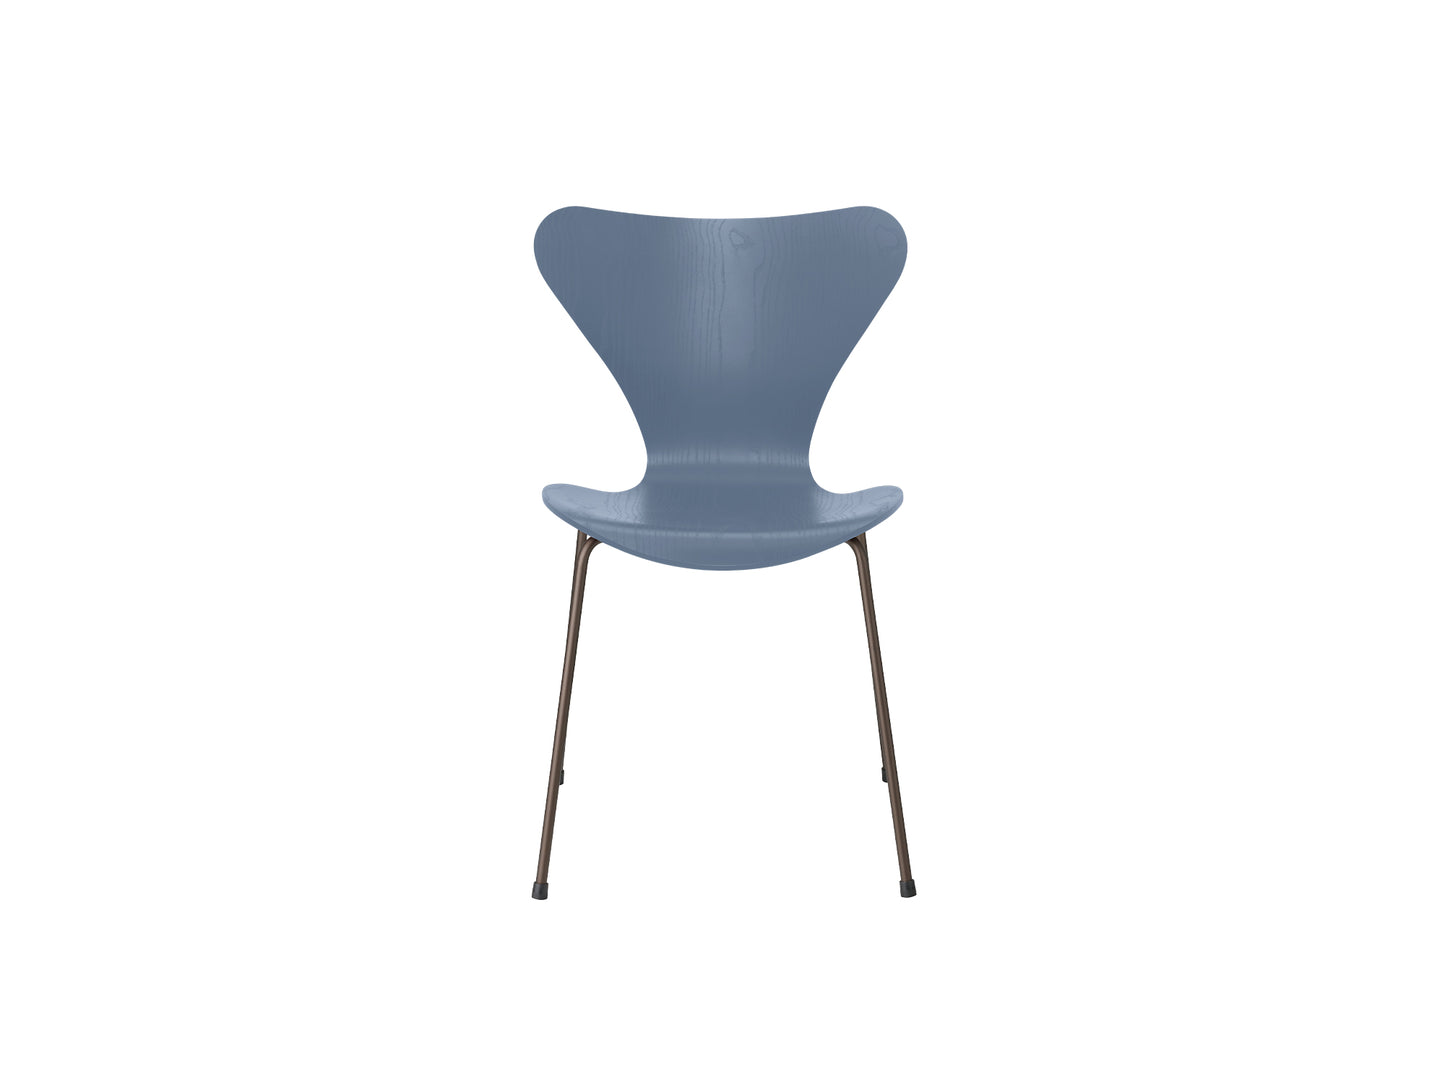 Series 7™ 3107 Dining Chair by Fritz Hansen - Dusk Blue Coloured Ash Veneer Shell / Brown Bronze Steel